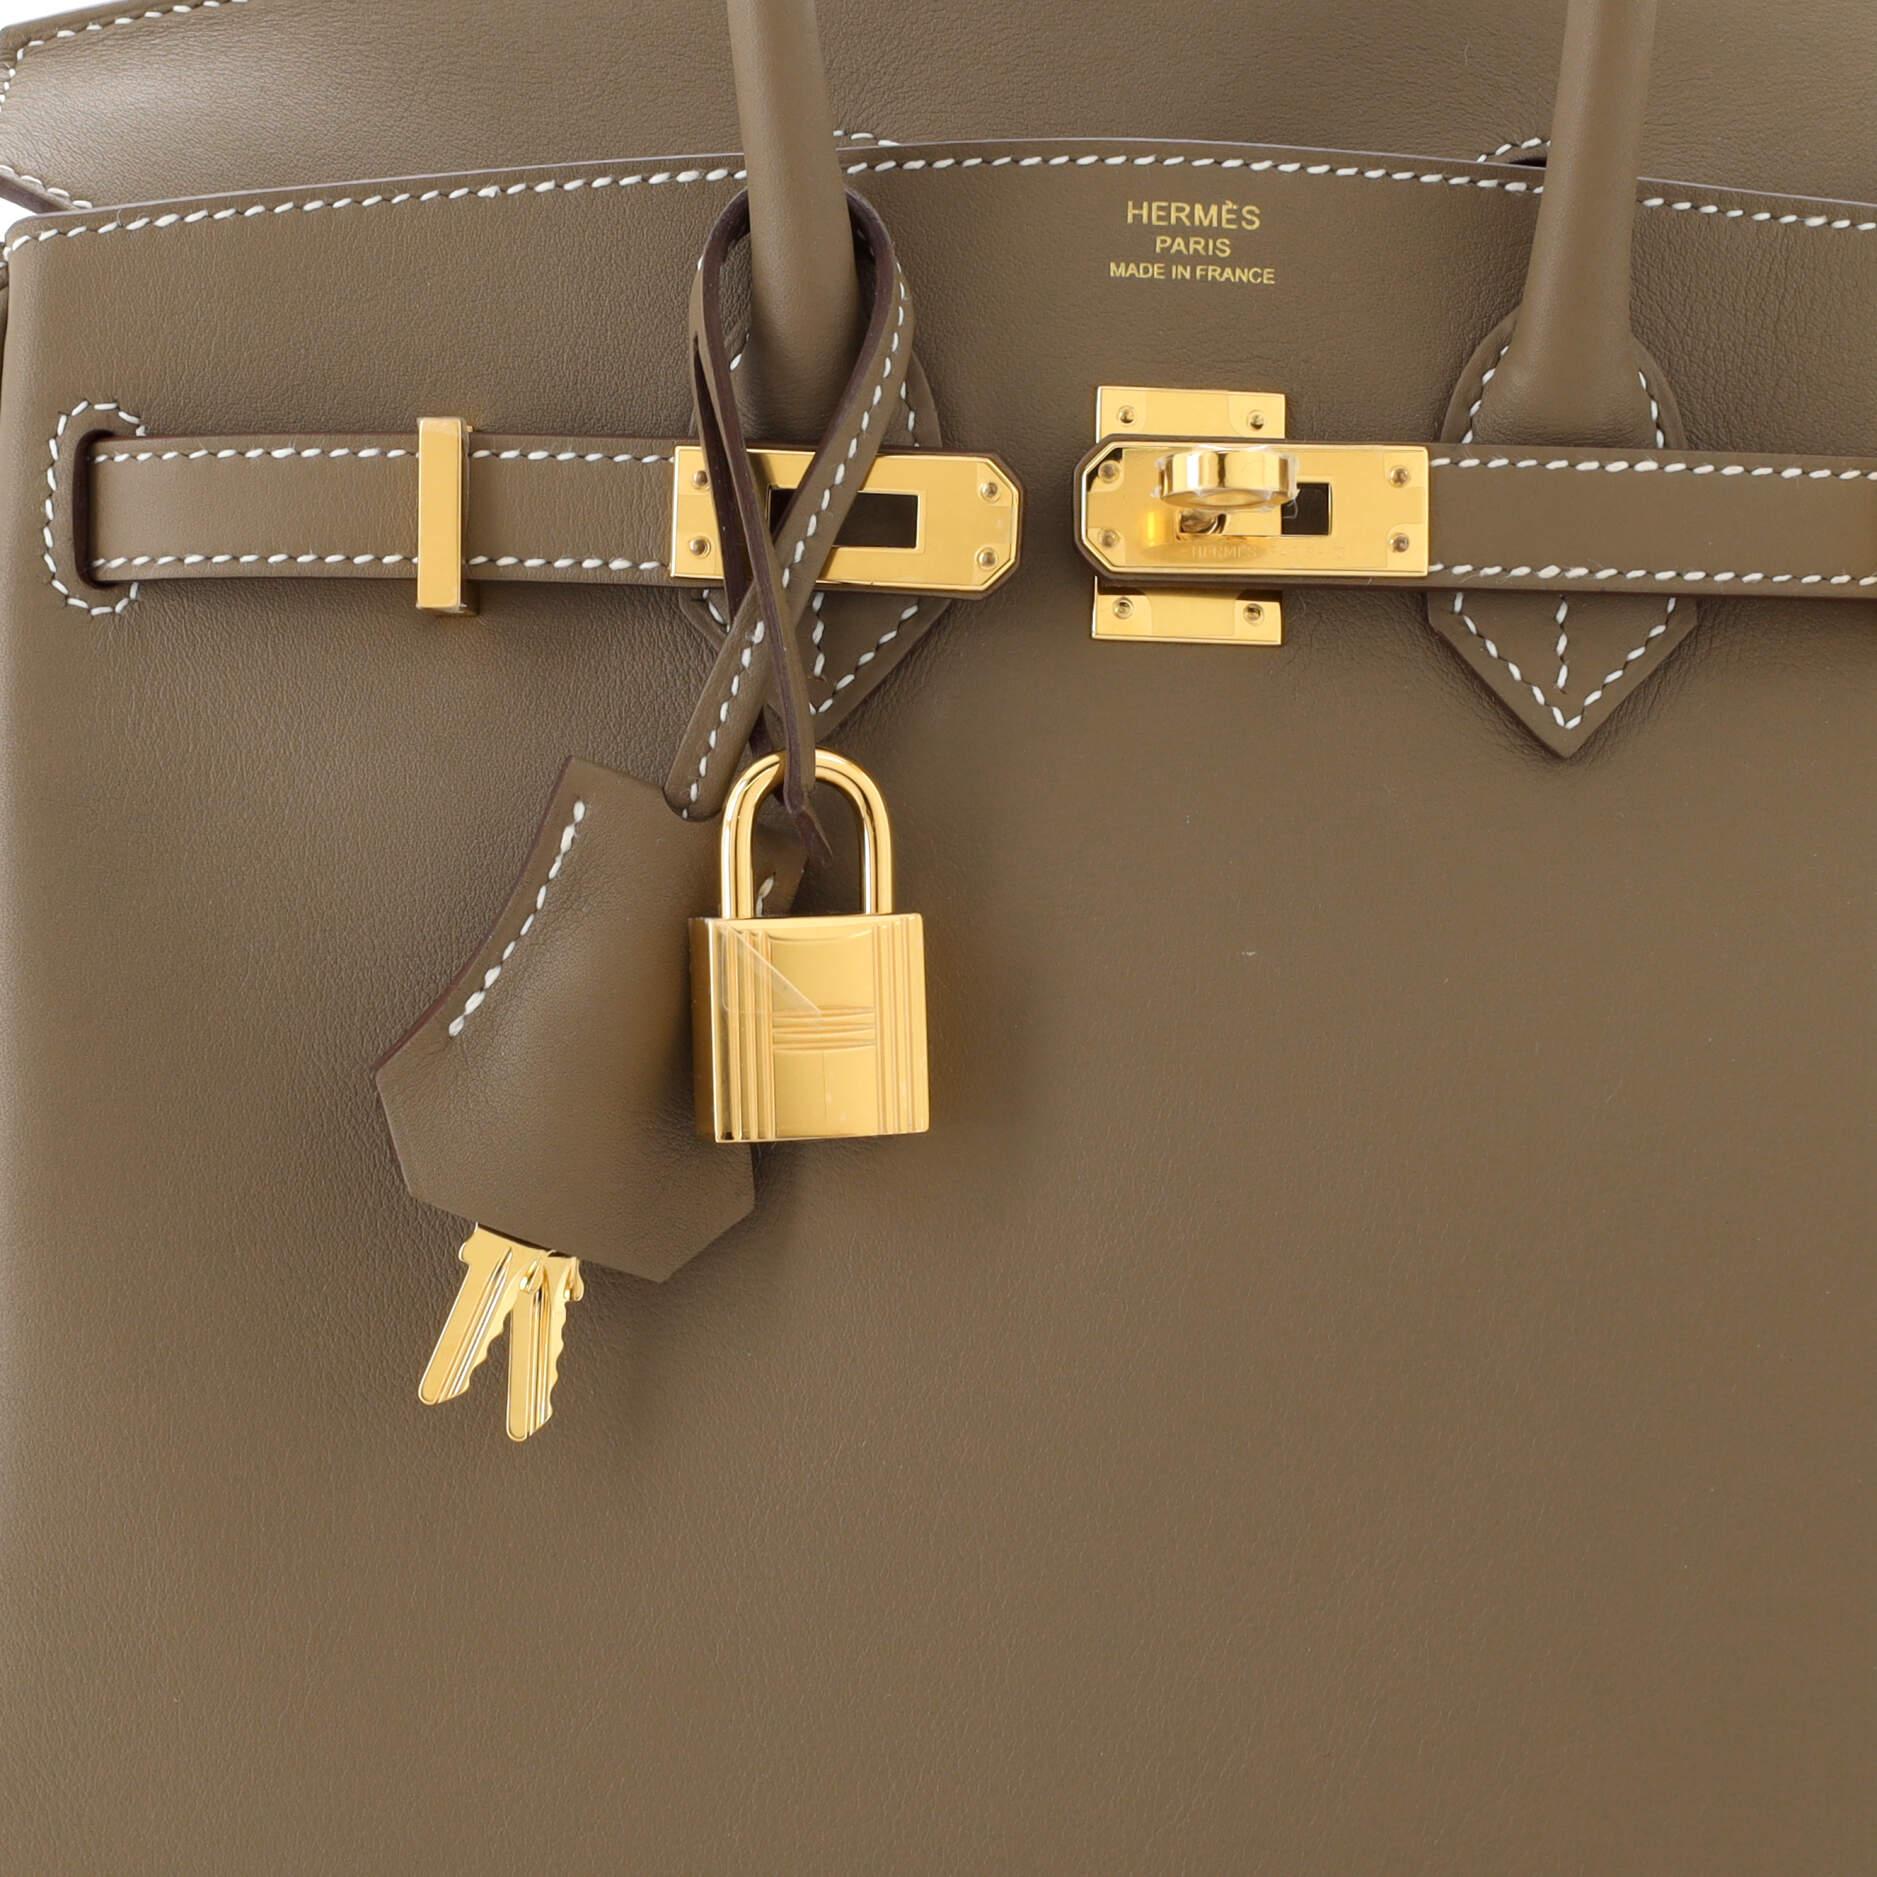 Hermes Birkin Handbag Grey Swift with Gold Hardware 25 3